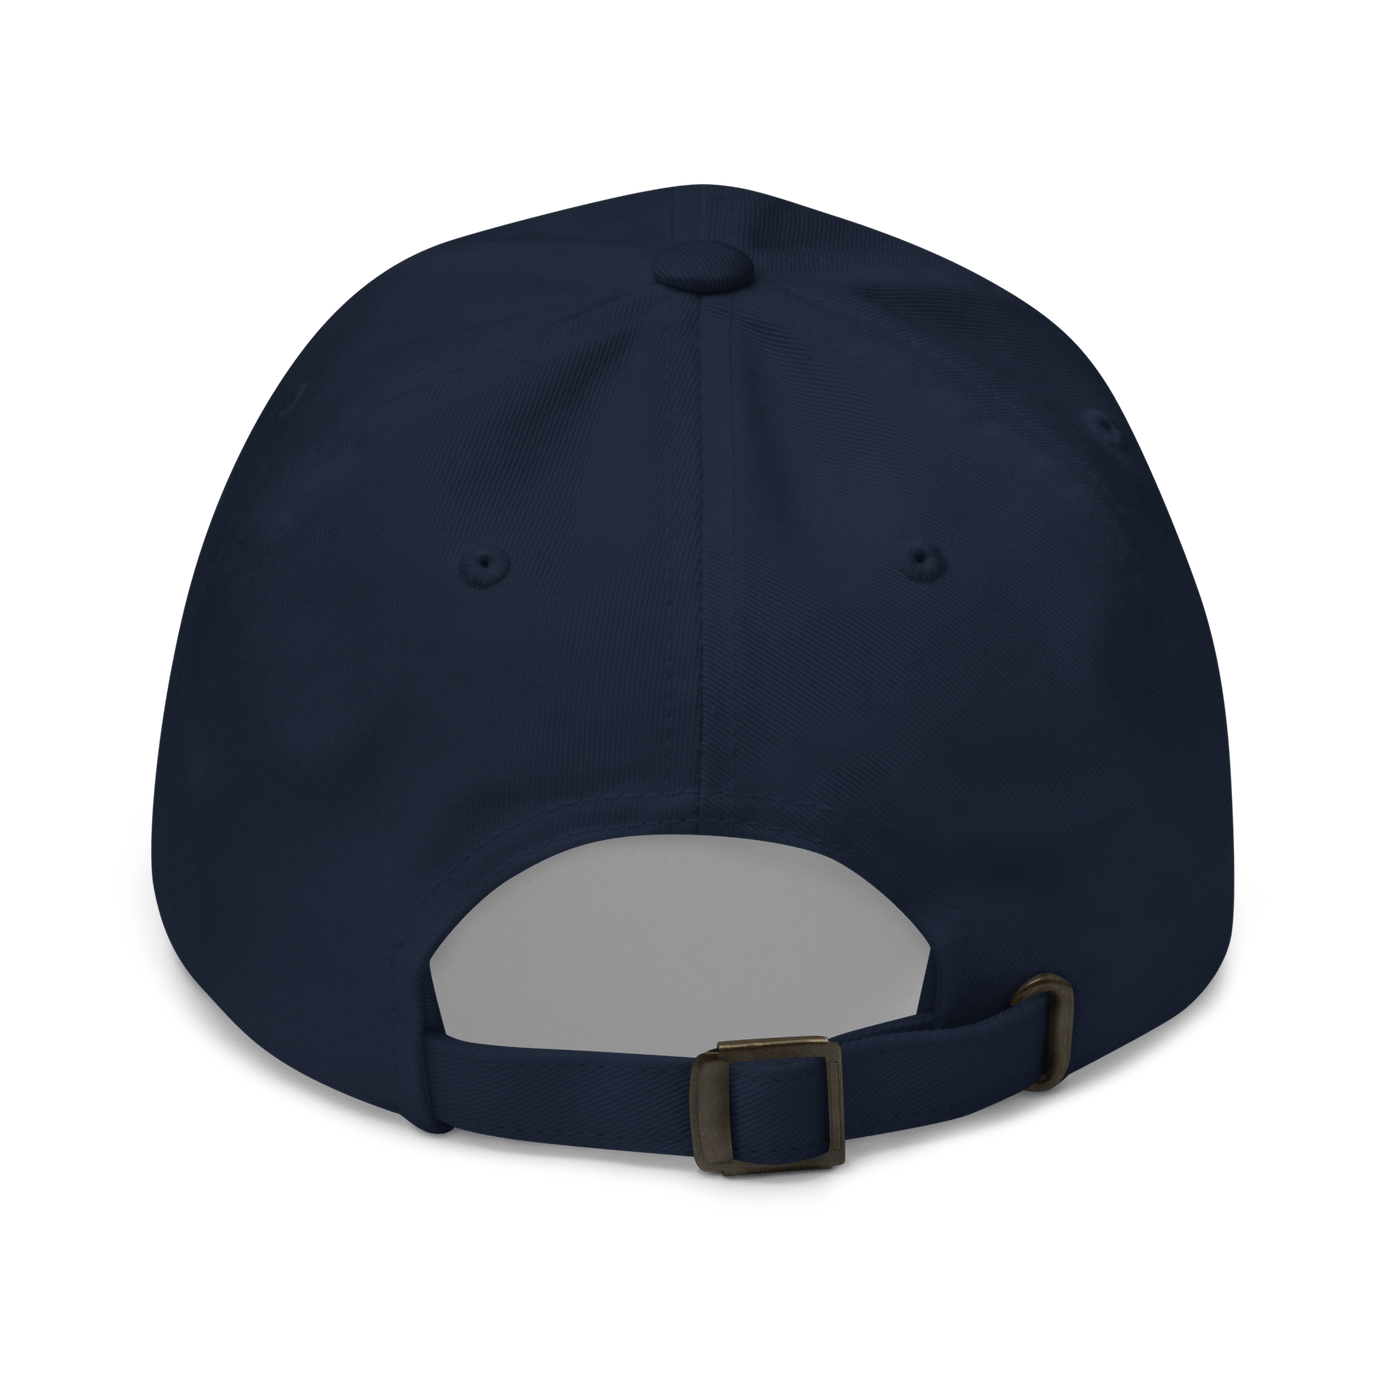 Ramen Bowl Dad hat - Navy - - Just Another Cap Store